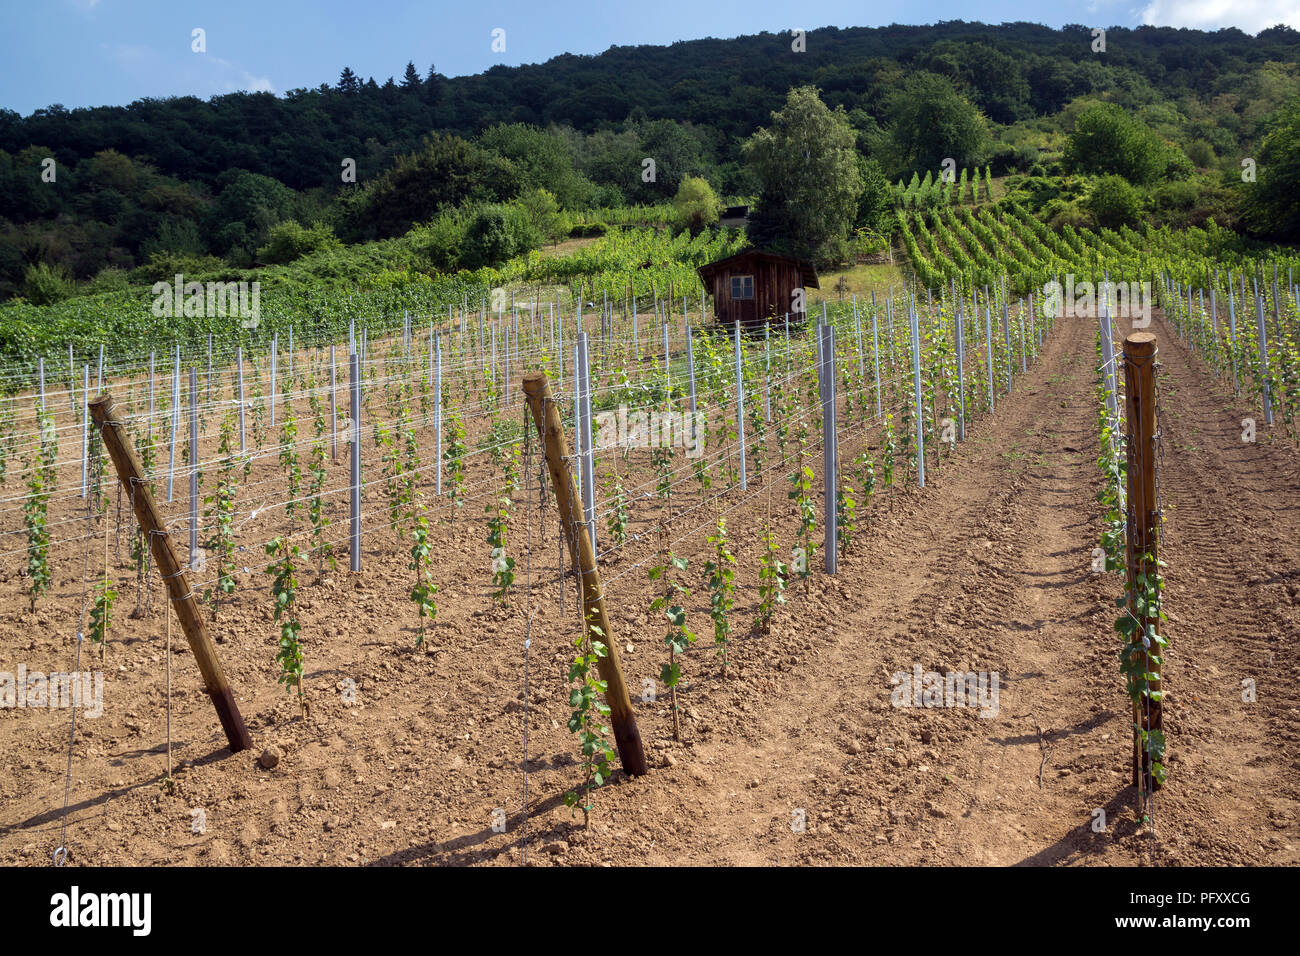 Viniculture, young grapevines, freshly grown vineyard, Dossenheim, Baden-Württemberg, Germany Stock Photo